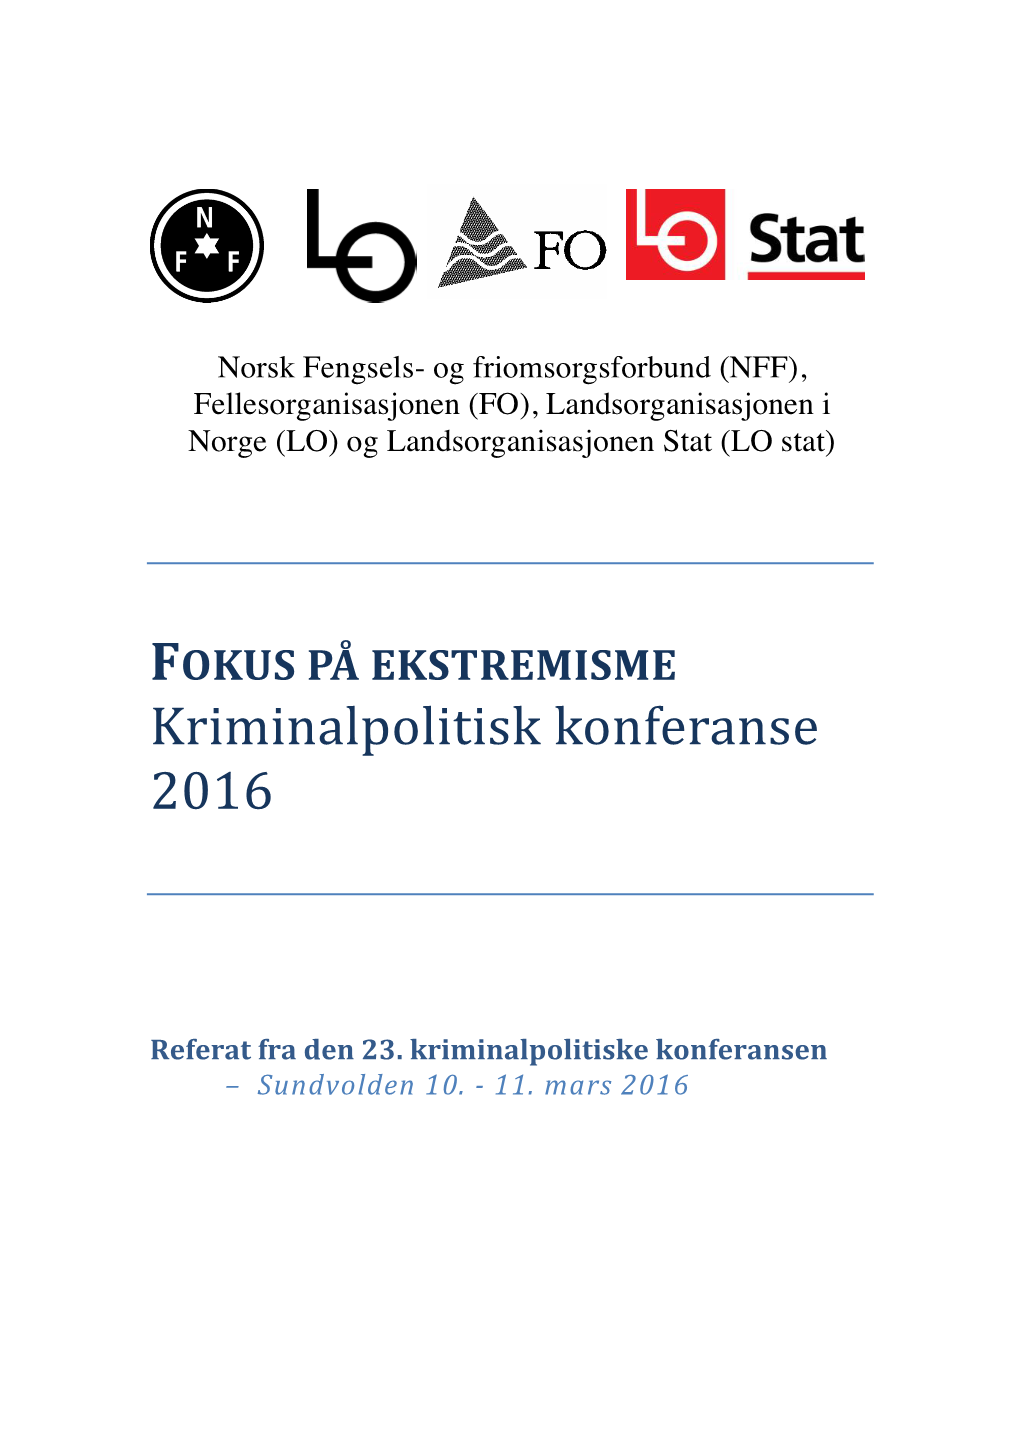 FOKUS PÅ EKSTREMISME Kriminalpolitisk Konferanse 2016